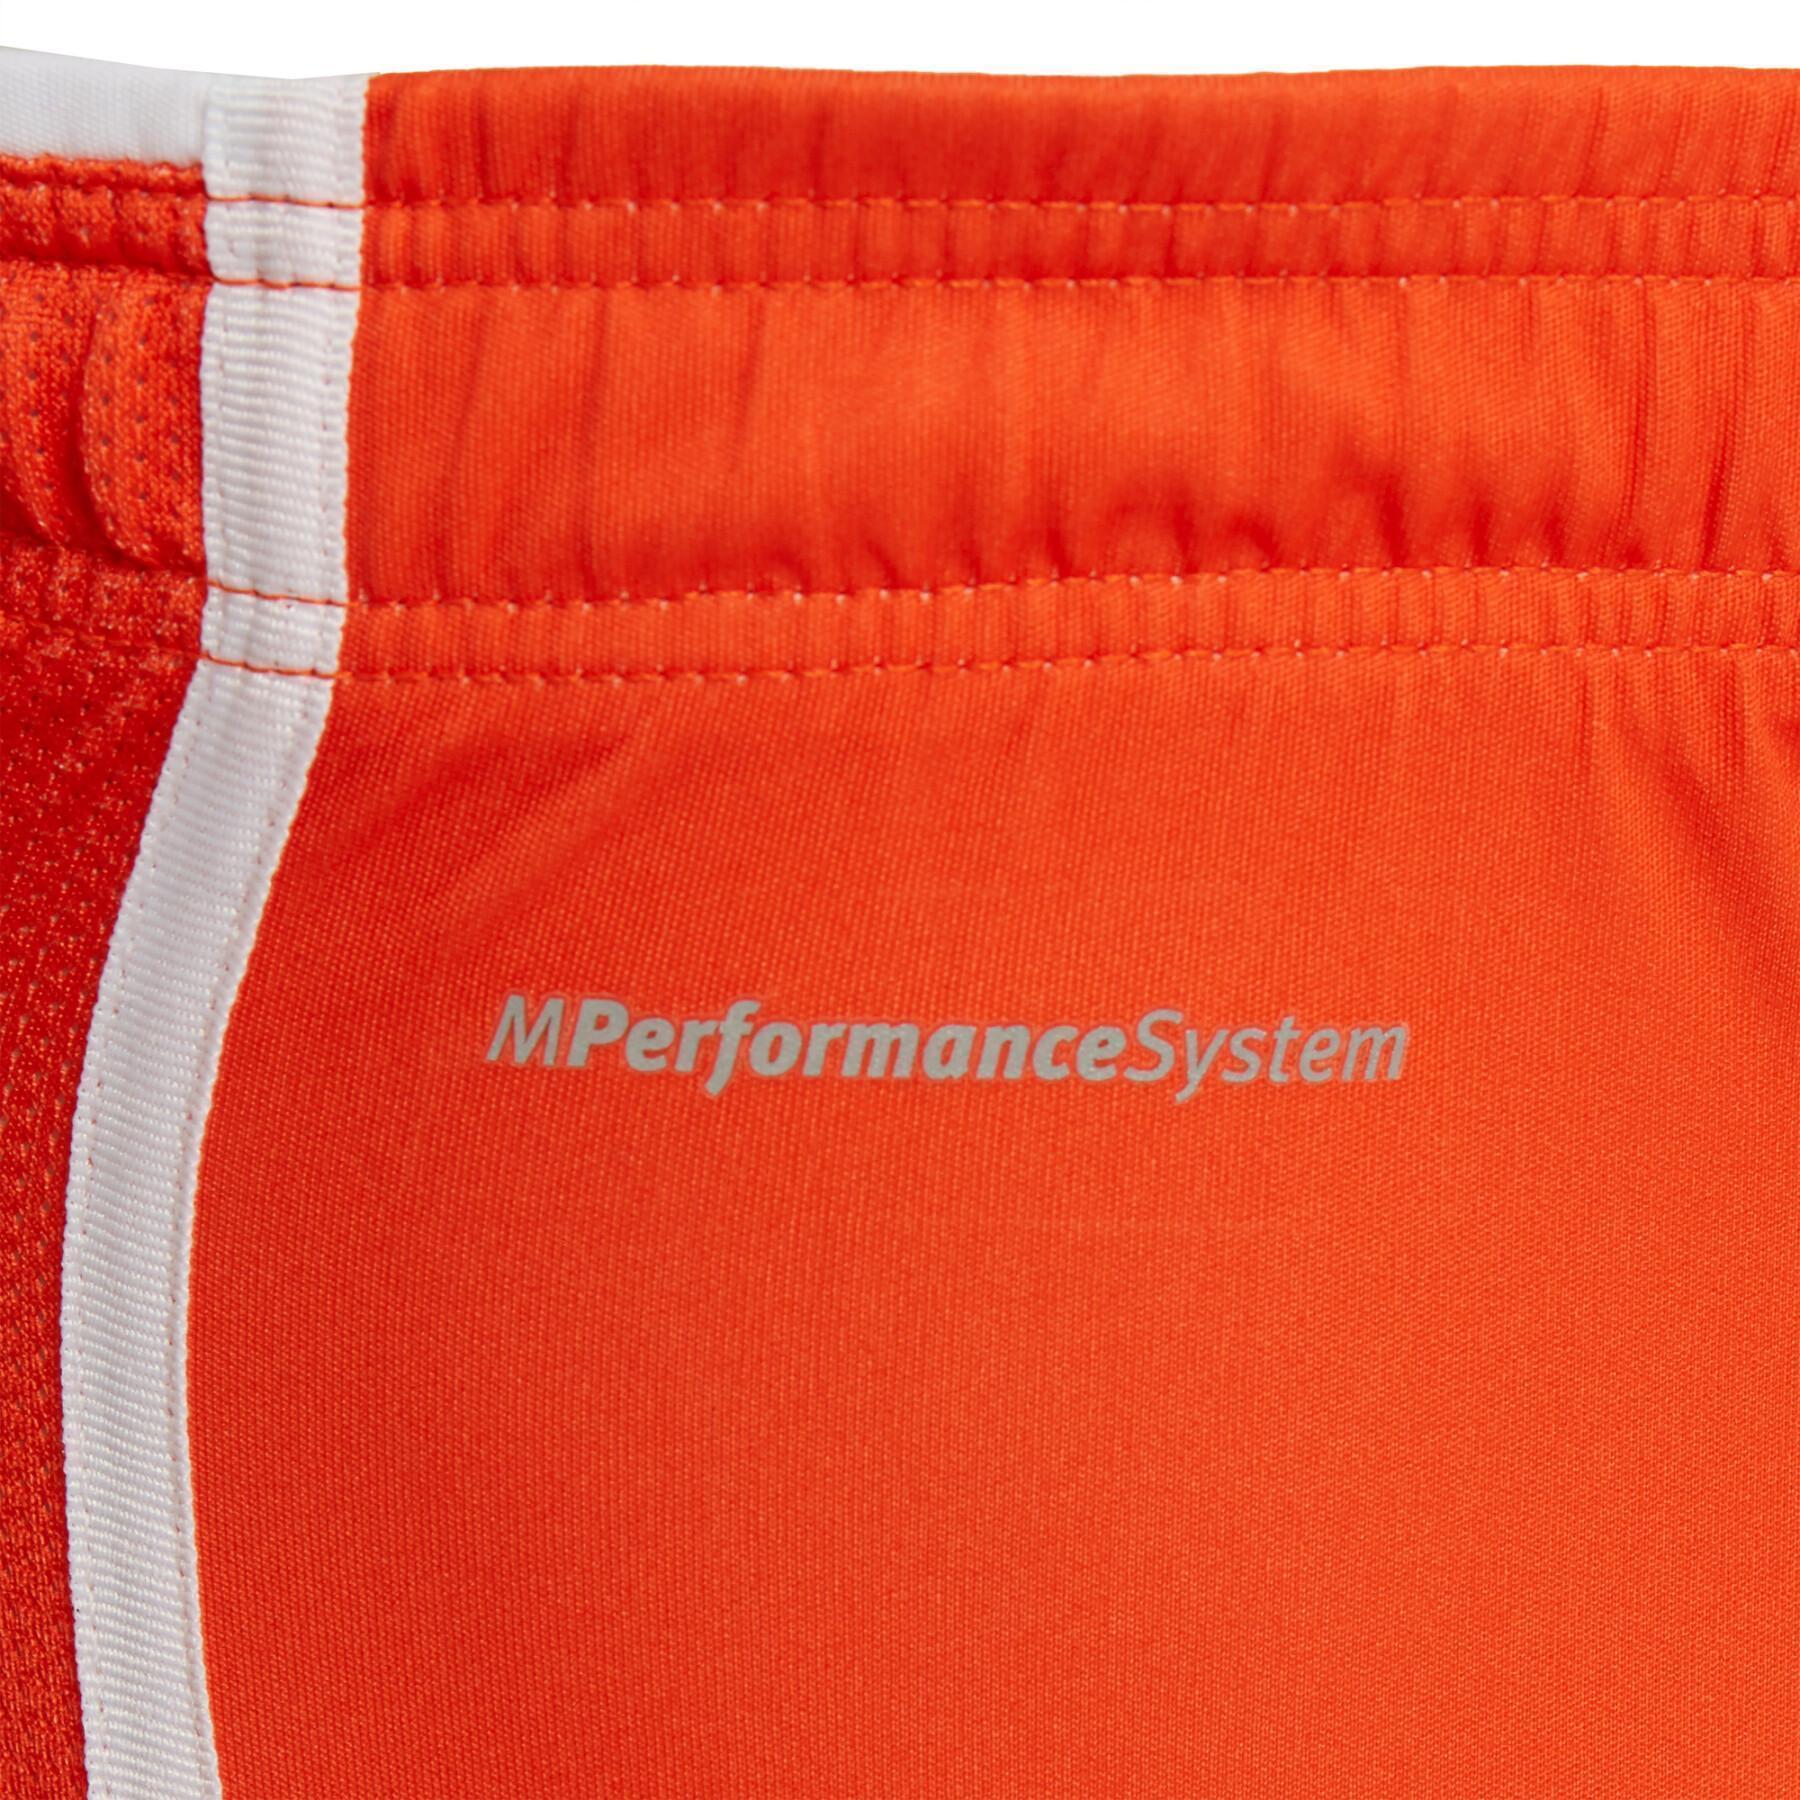 Pantalones cortos para exteriores SPAL 2013 18/19